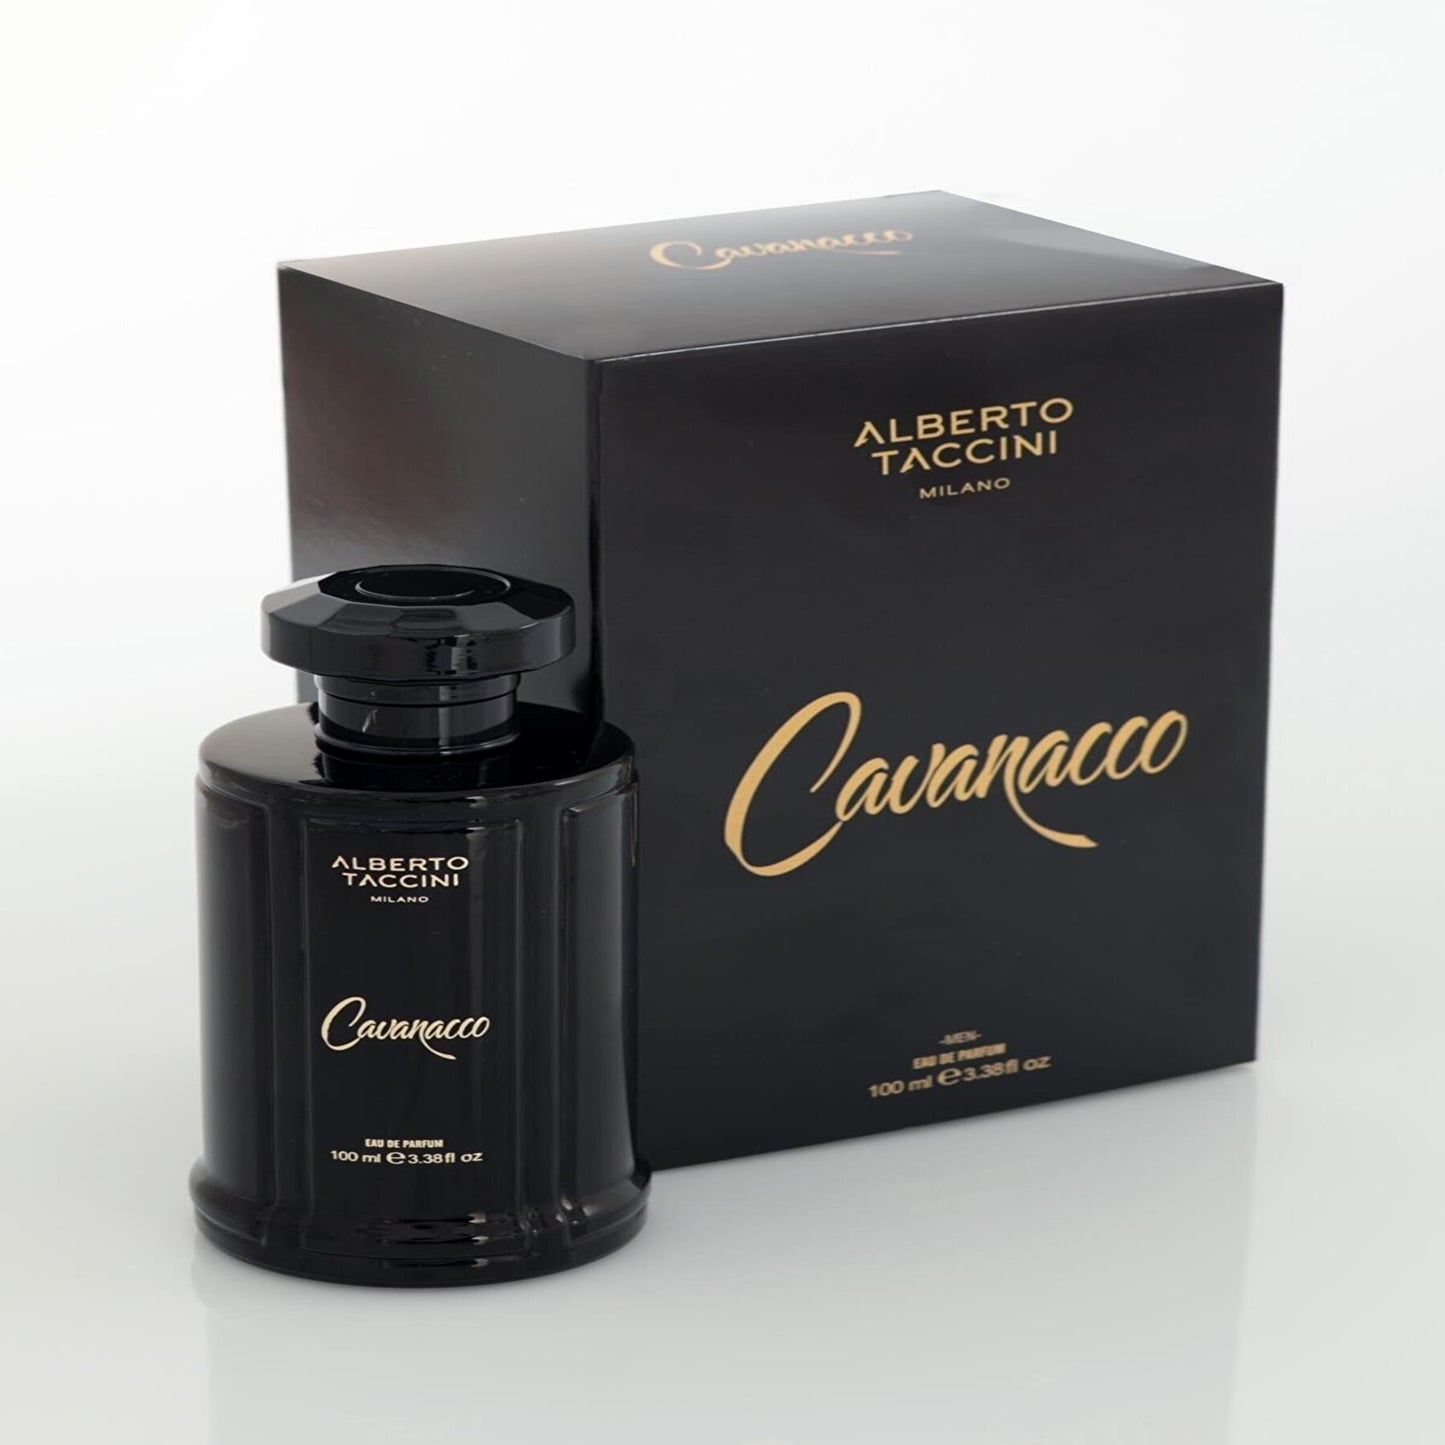 Alberto Taccini Milano Cavanacco Parfum Homme